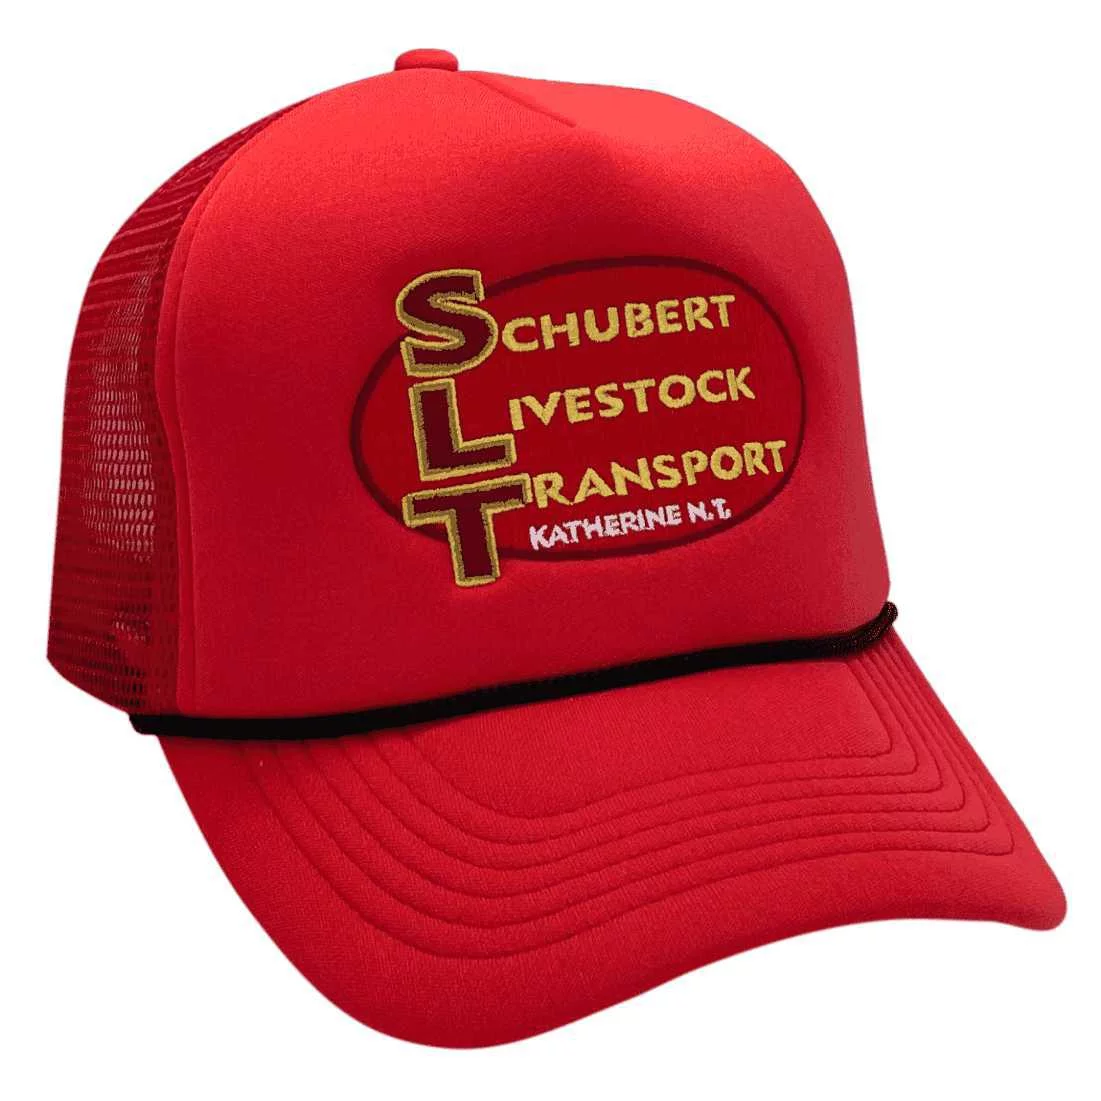 Schubert Livestock Transport Katherine NT HP Foamie Aussie Trucker Hat with Australian Head Fit Crown Sizing and Rope Sash